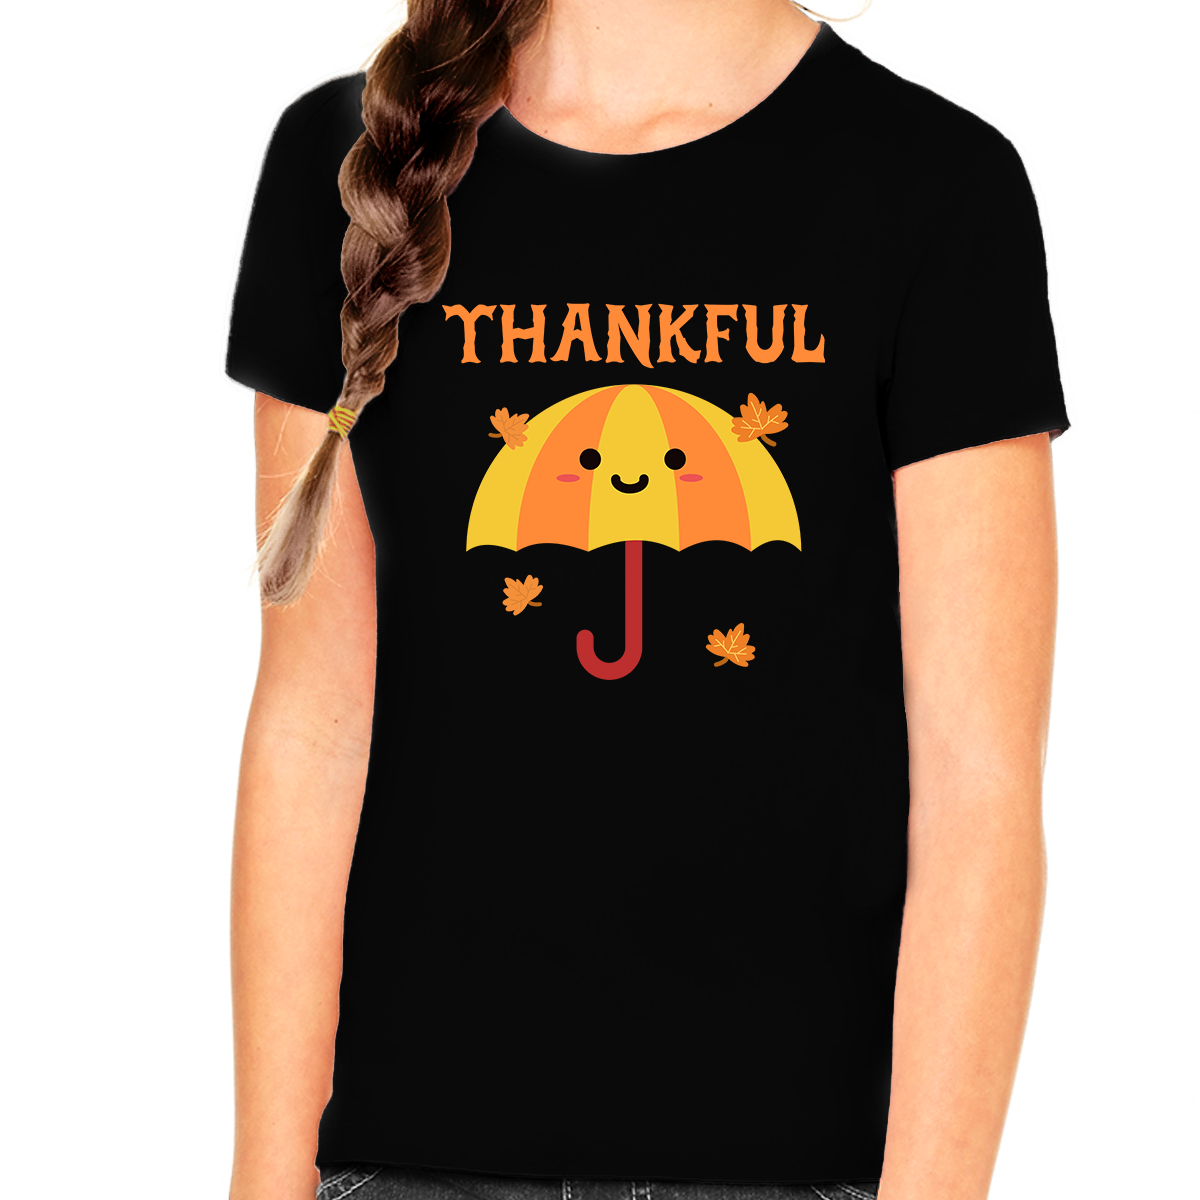 Funny Girls Thanksgiving Shirt Kids Thankful Shirts for Girls Fall Shirt Girls Thanksgiving Shirts for Kids